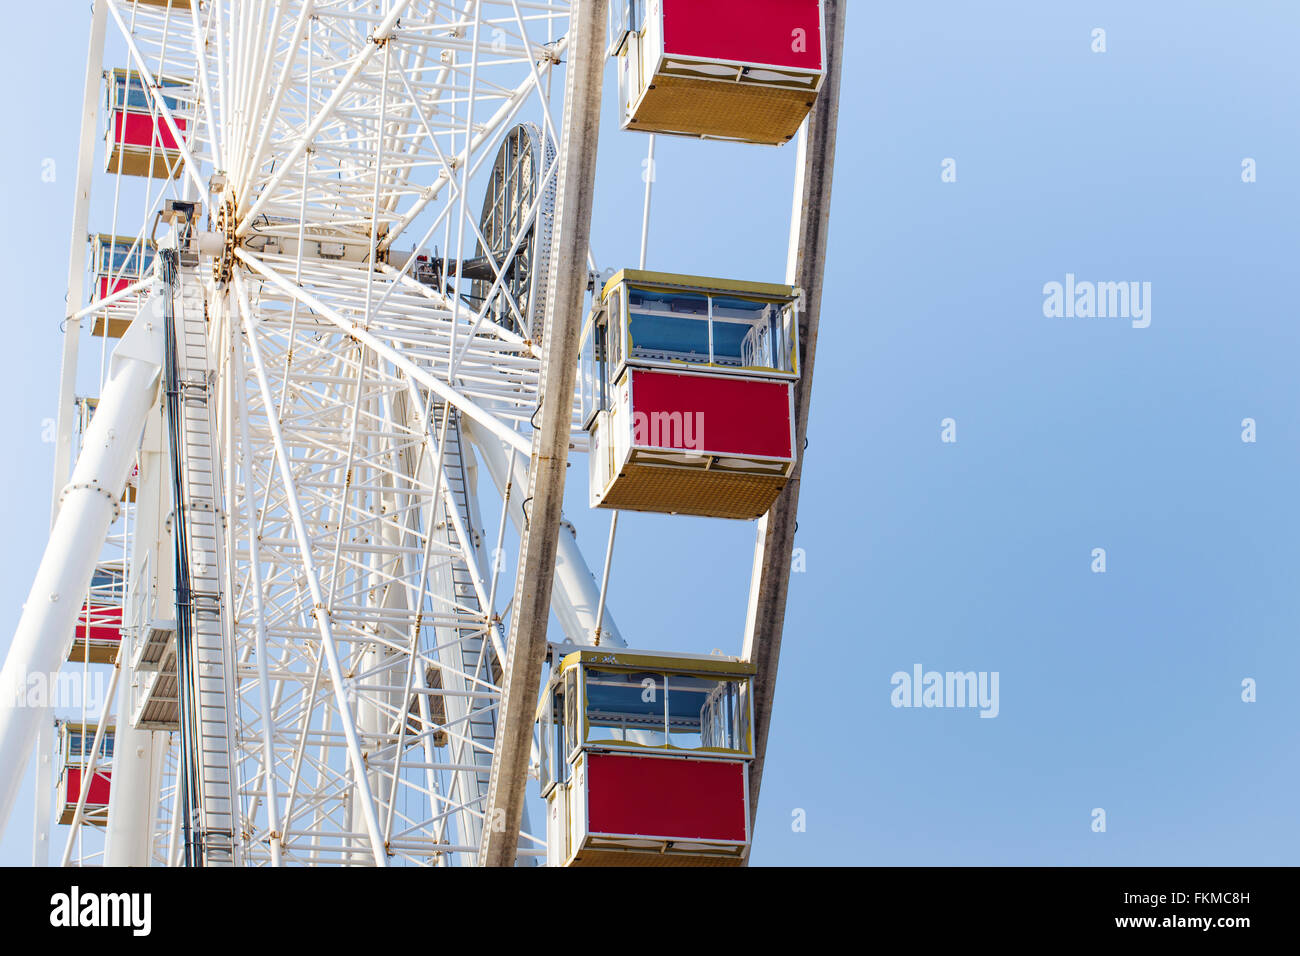 Ferris wheel on blue sky, detail Stock Photo